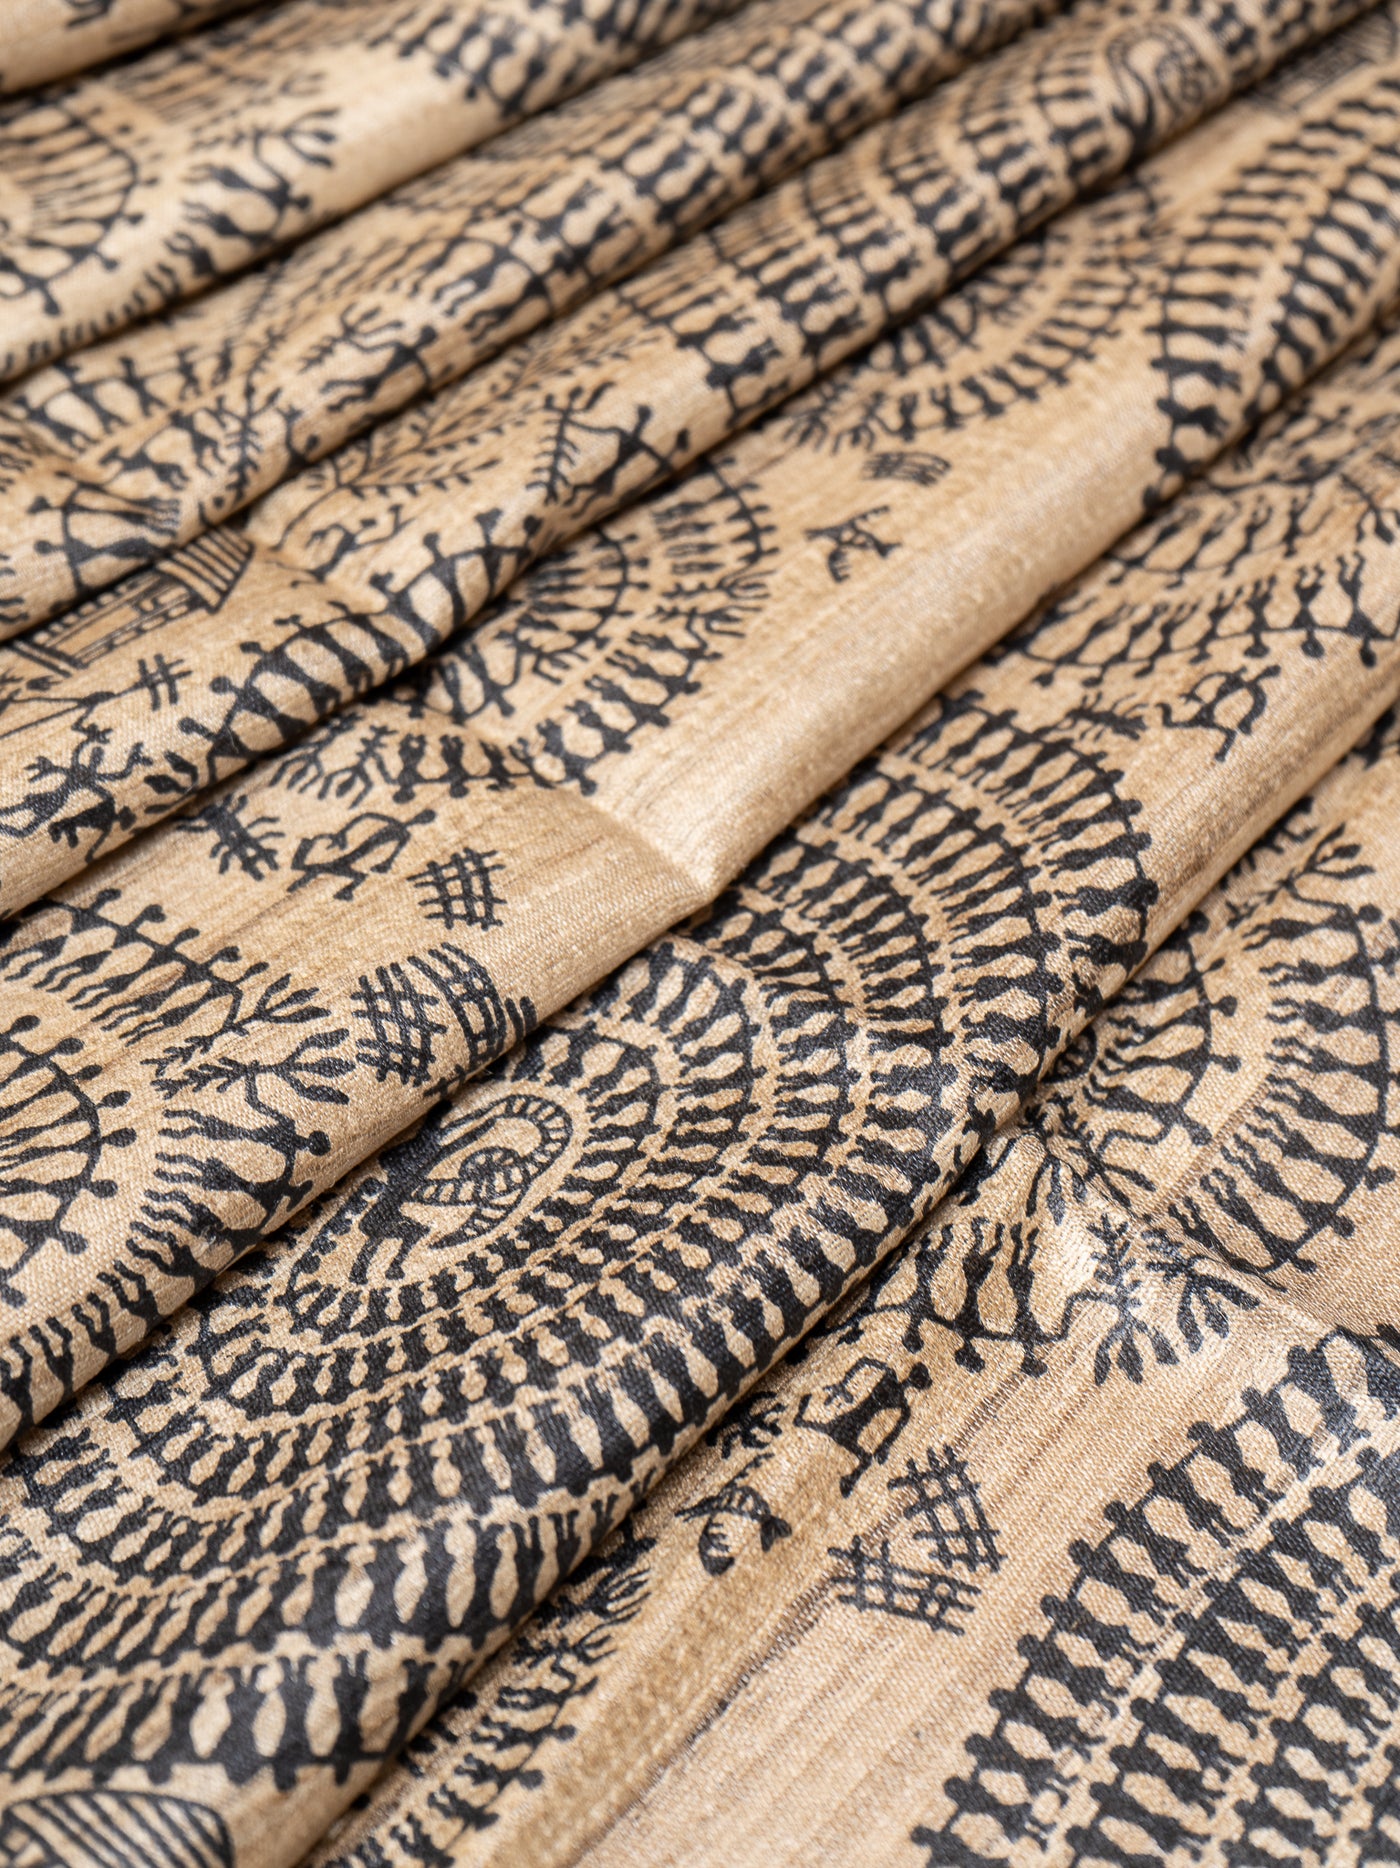 Beige and Black Warli Hand-Printed Pure Tussar Saree - Clio Silks